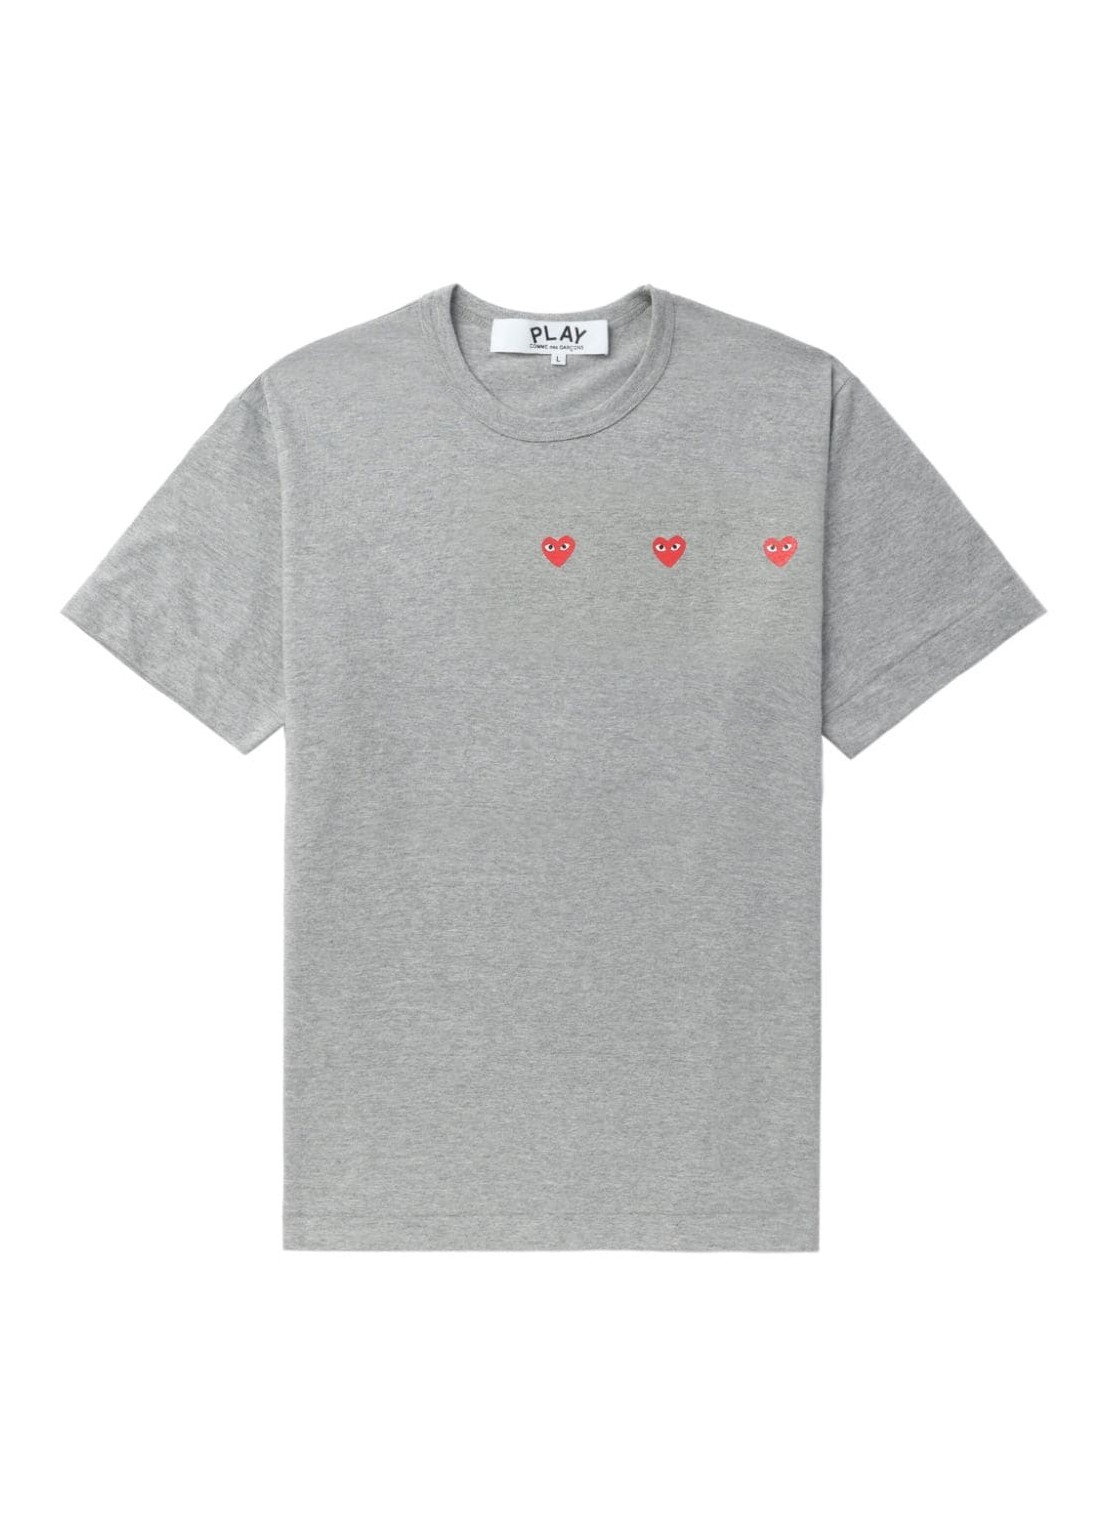 Camiseta comme des garcons t-shirt manhorizontal 3 heart short sleeve t-shirt - axt337051 grey talla